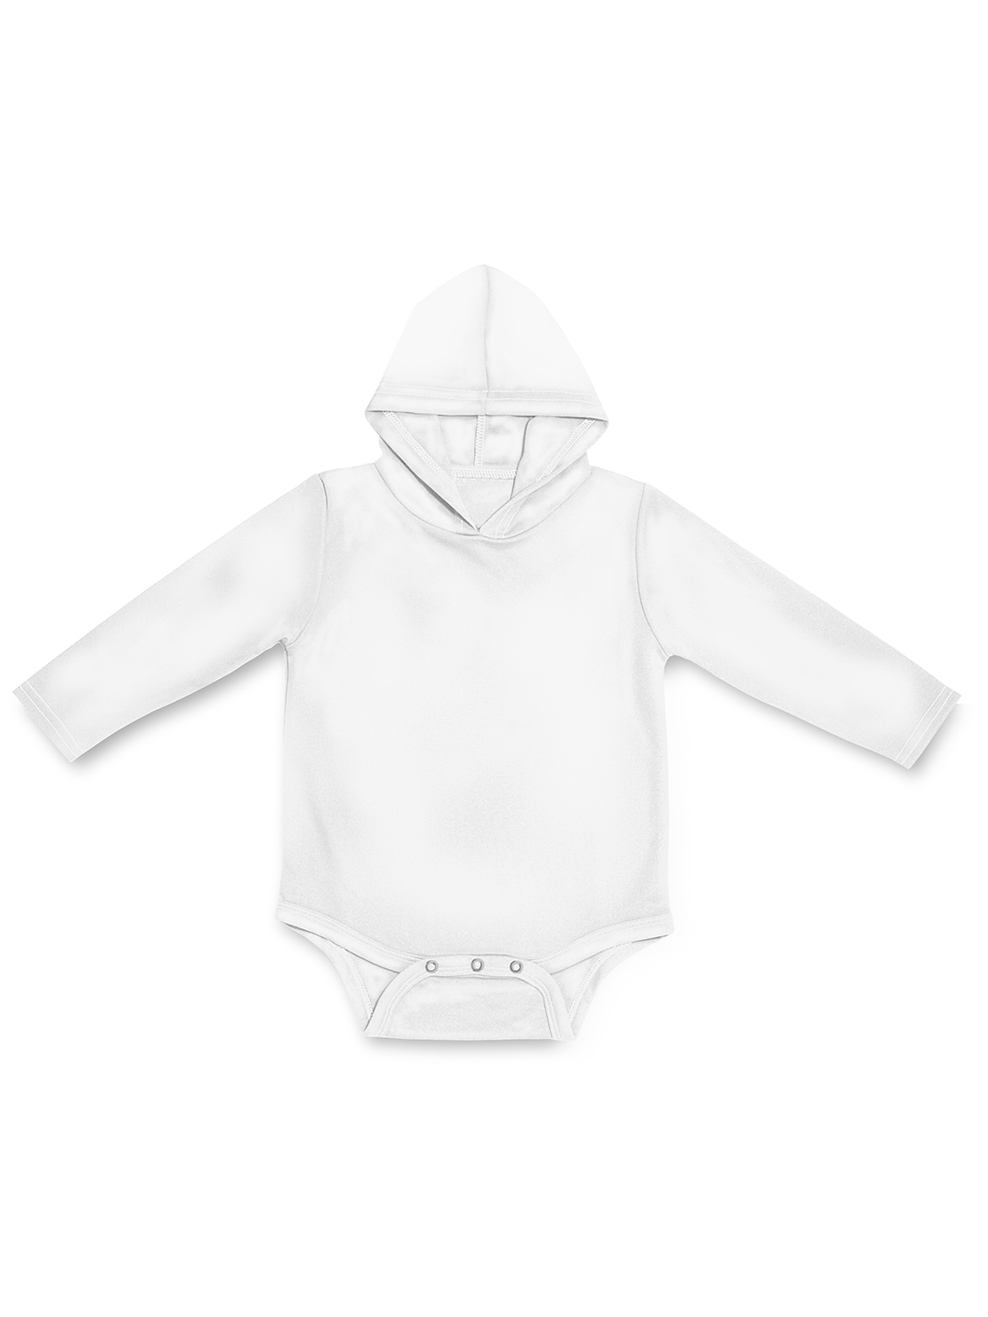 Baby Sun Protection Bodysuit w/ Hood (Baby Boys or Baby Girls Unisex) - image 1 of 2